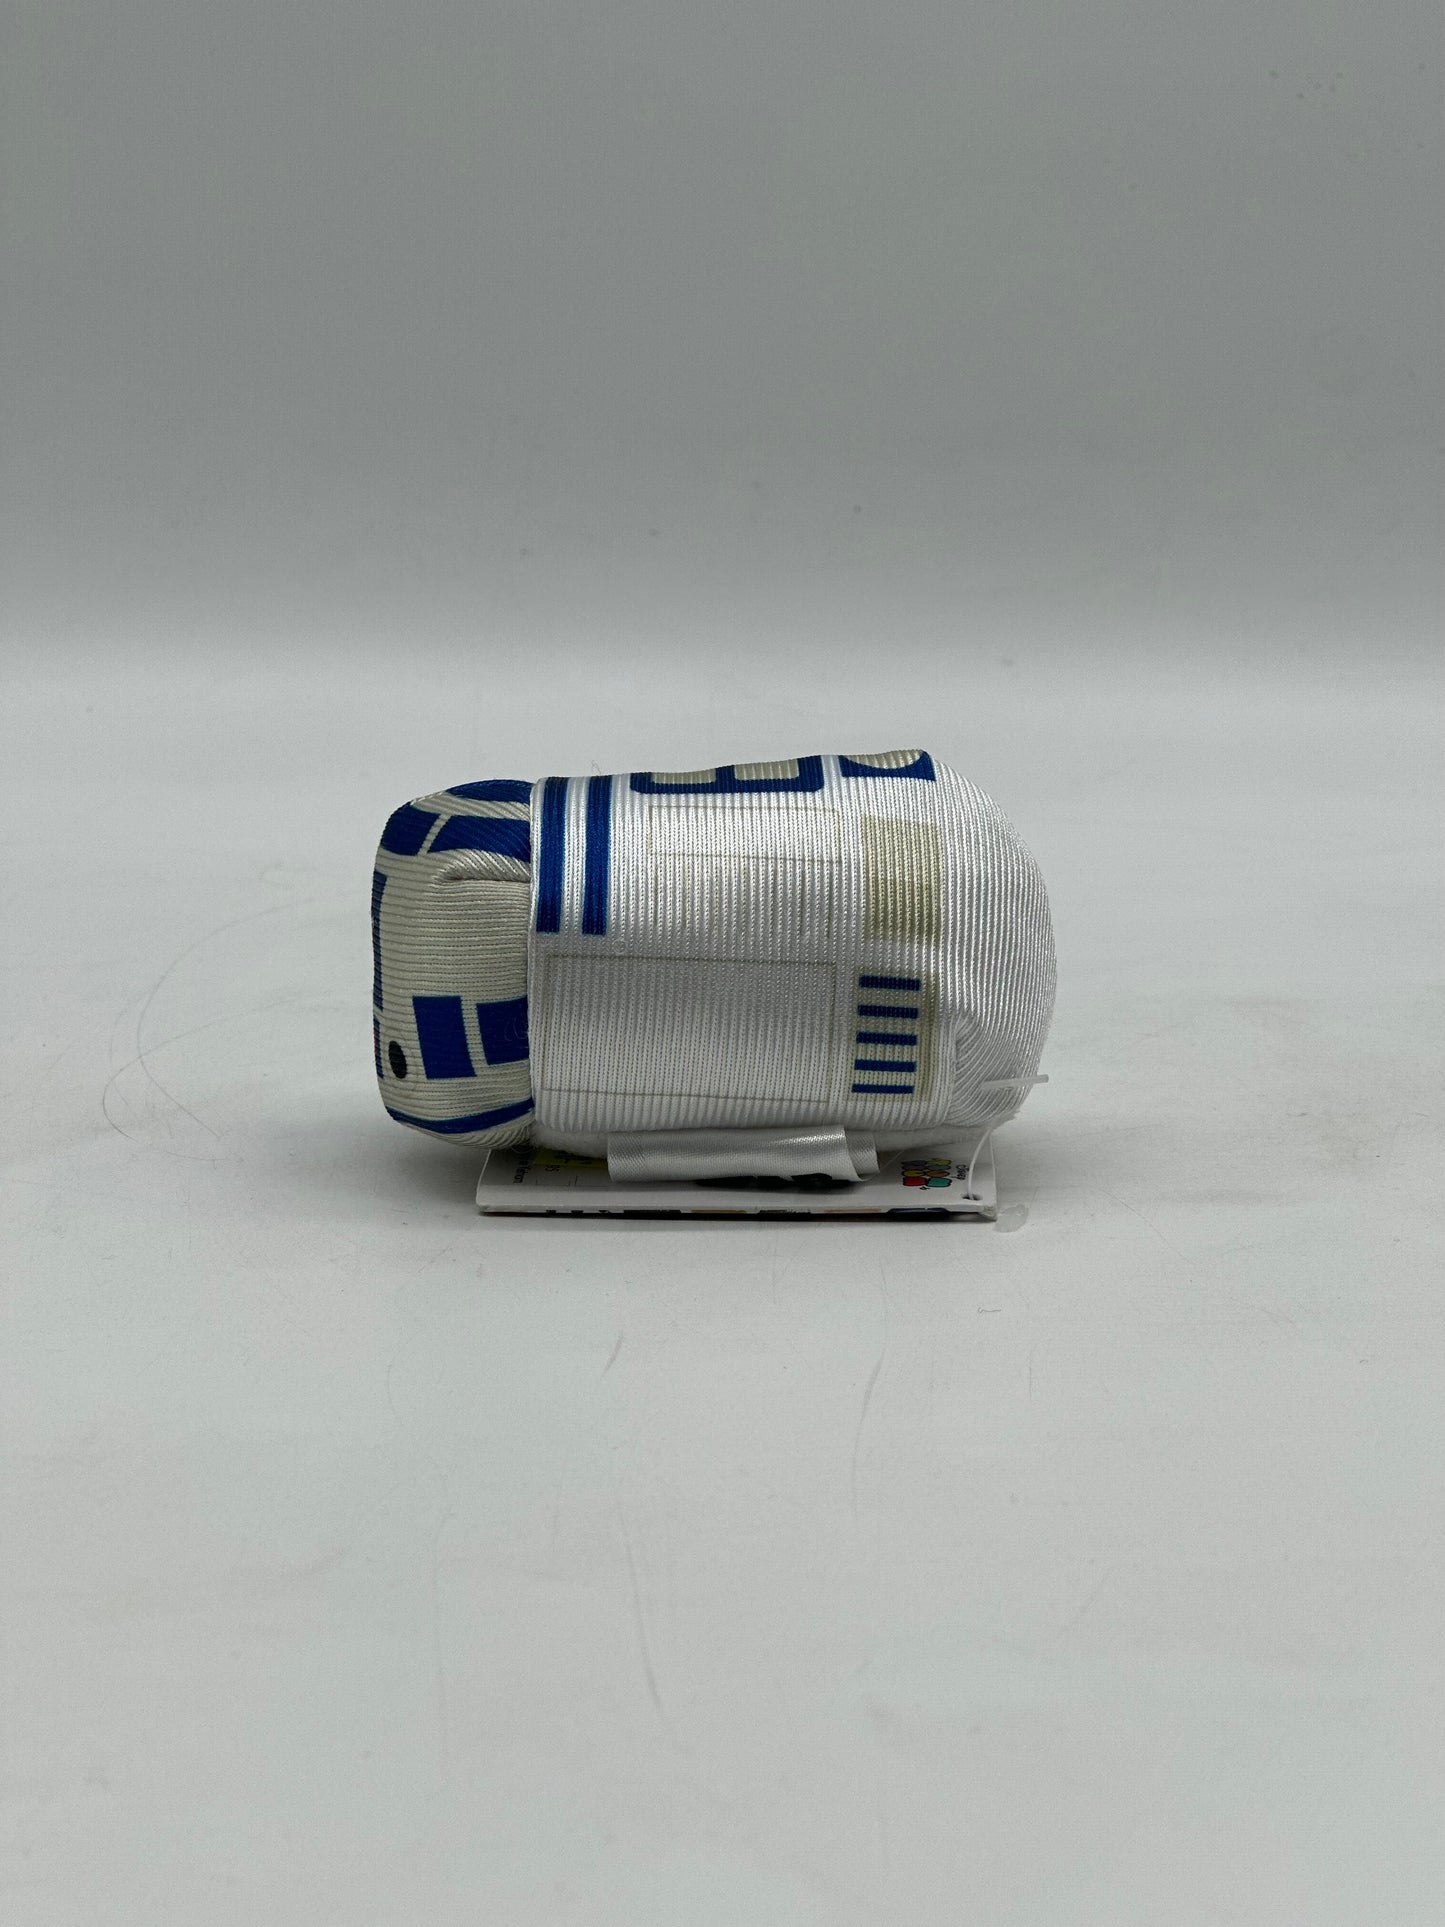 Tsum Tsum R2-D2 Plush Mini